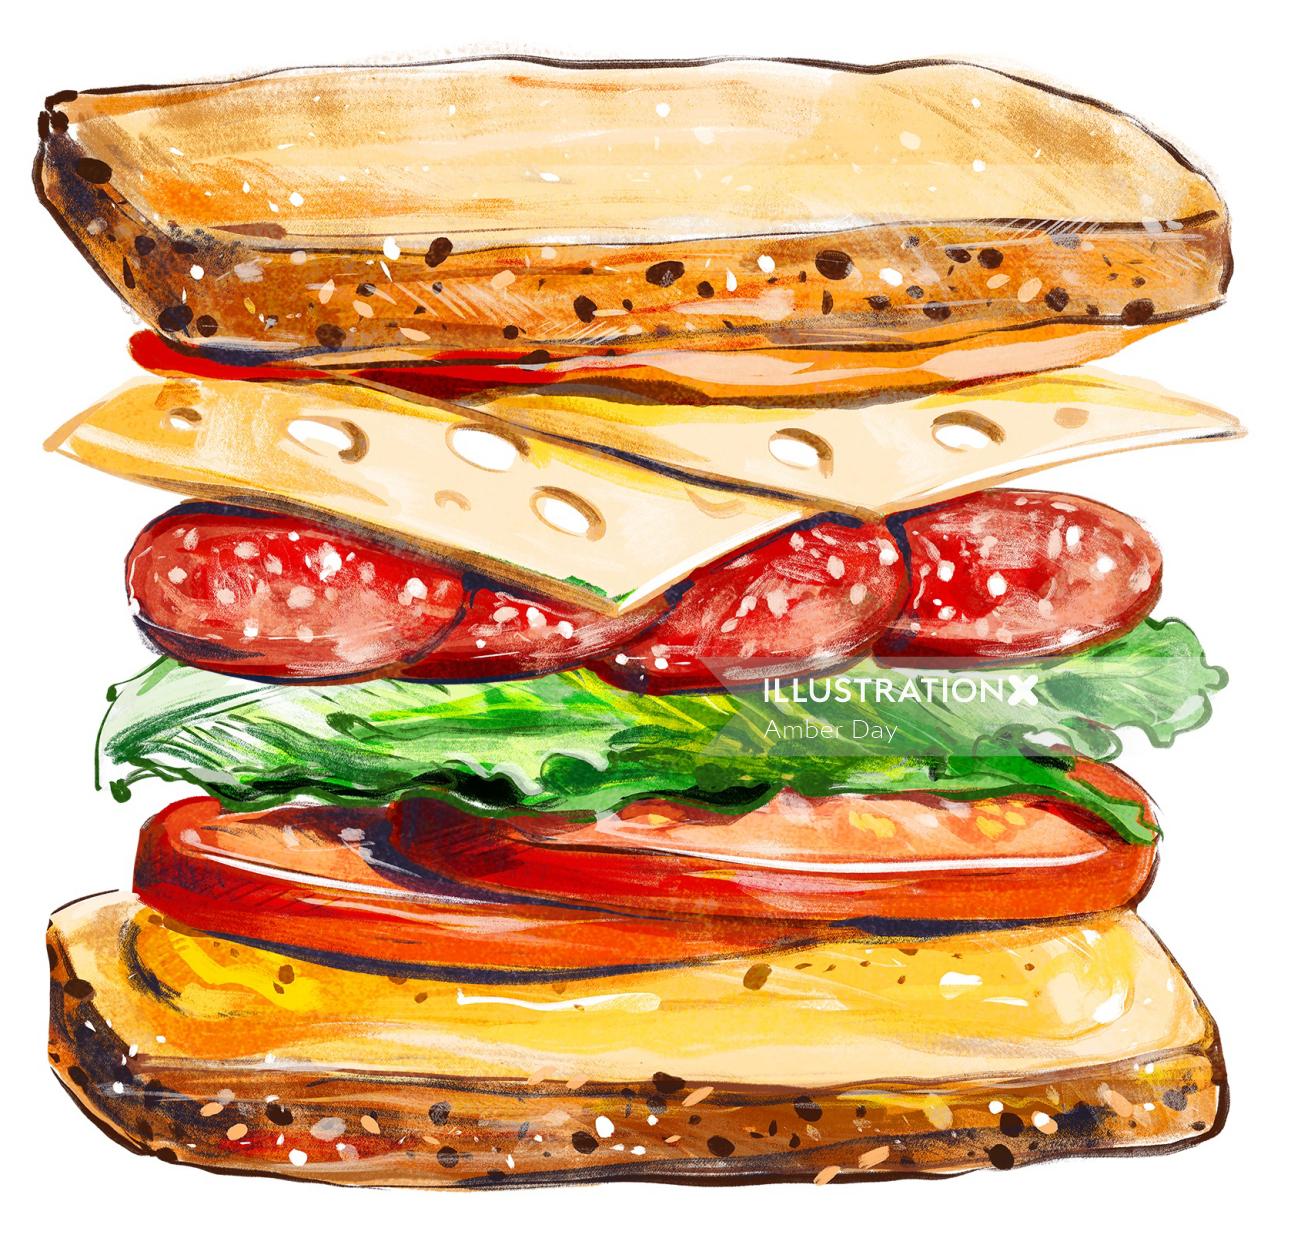 Delicious veggie sandwich illustration